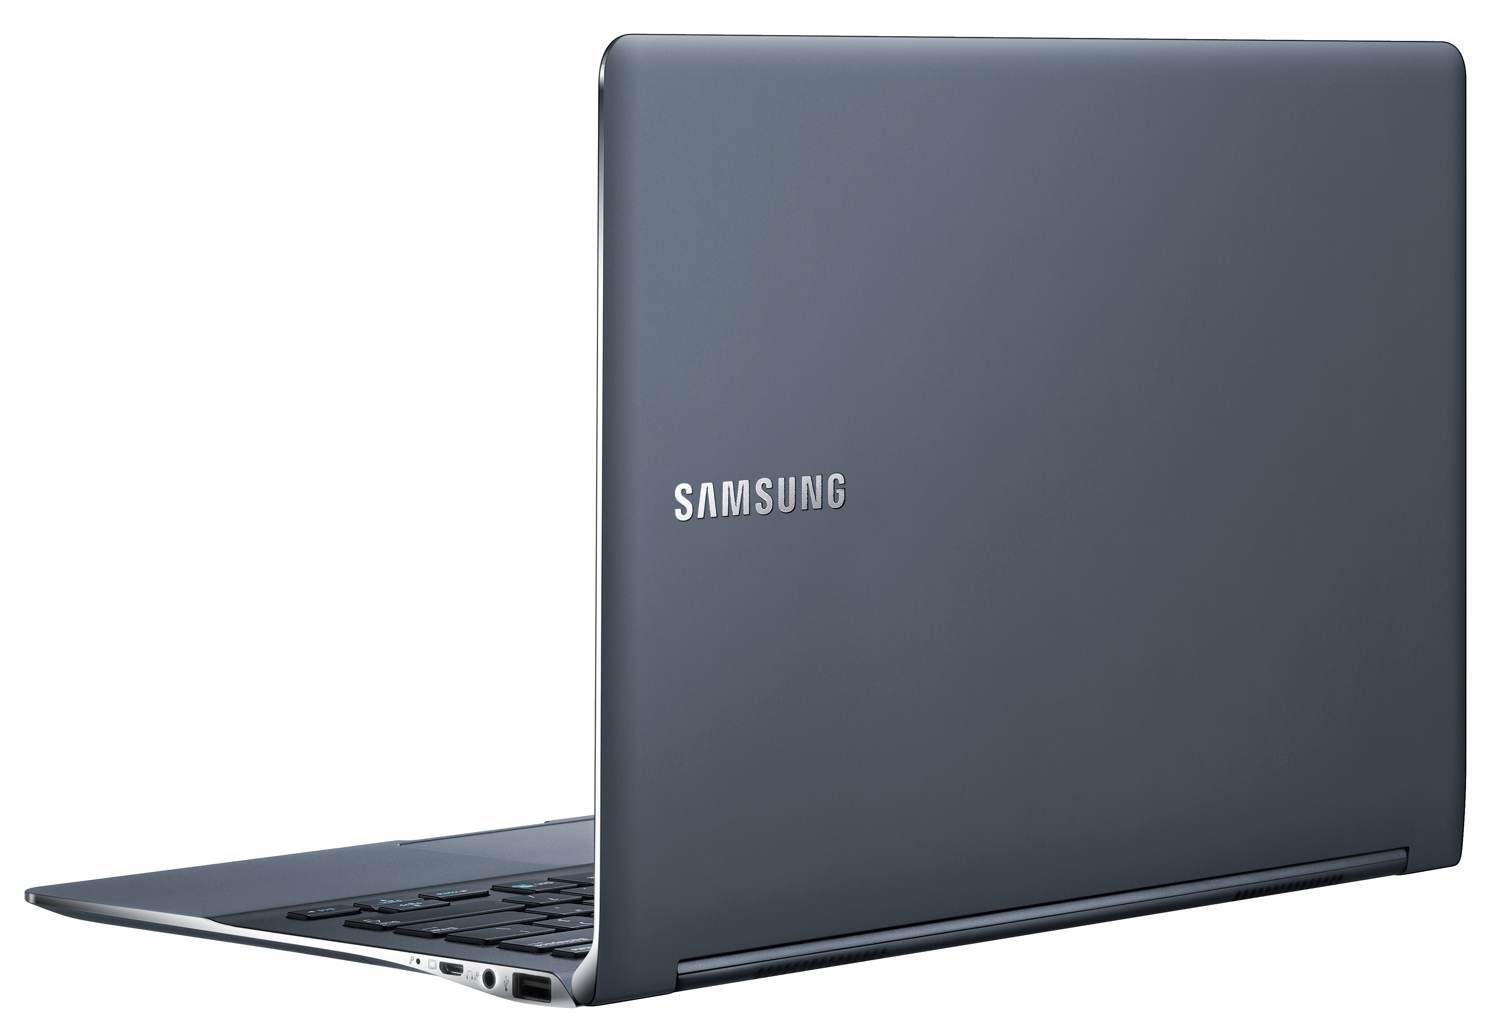 Laptop Samsung Series 9 NP900X3C-A02VN - Intel Core i7-3517U 1.9GHz, 4GB RAM, 256GB SSD, Intel HD Graphics 4000, 13.3 inch